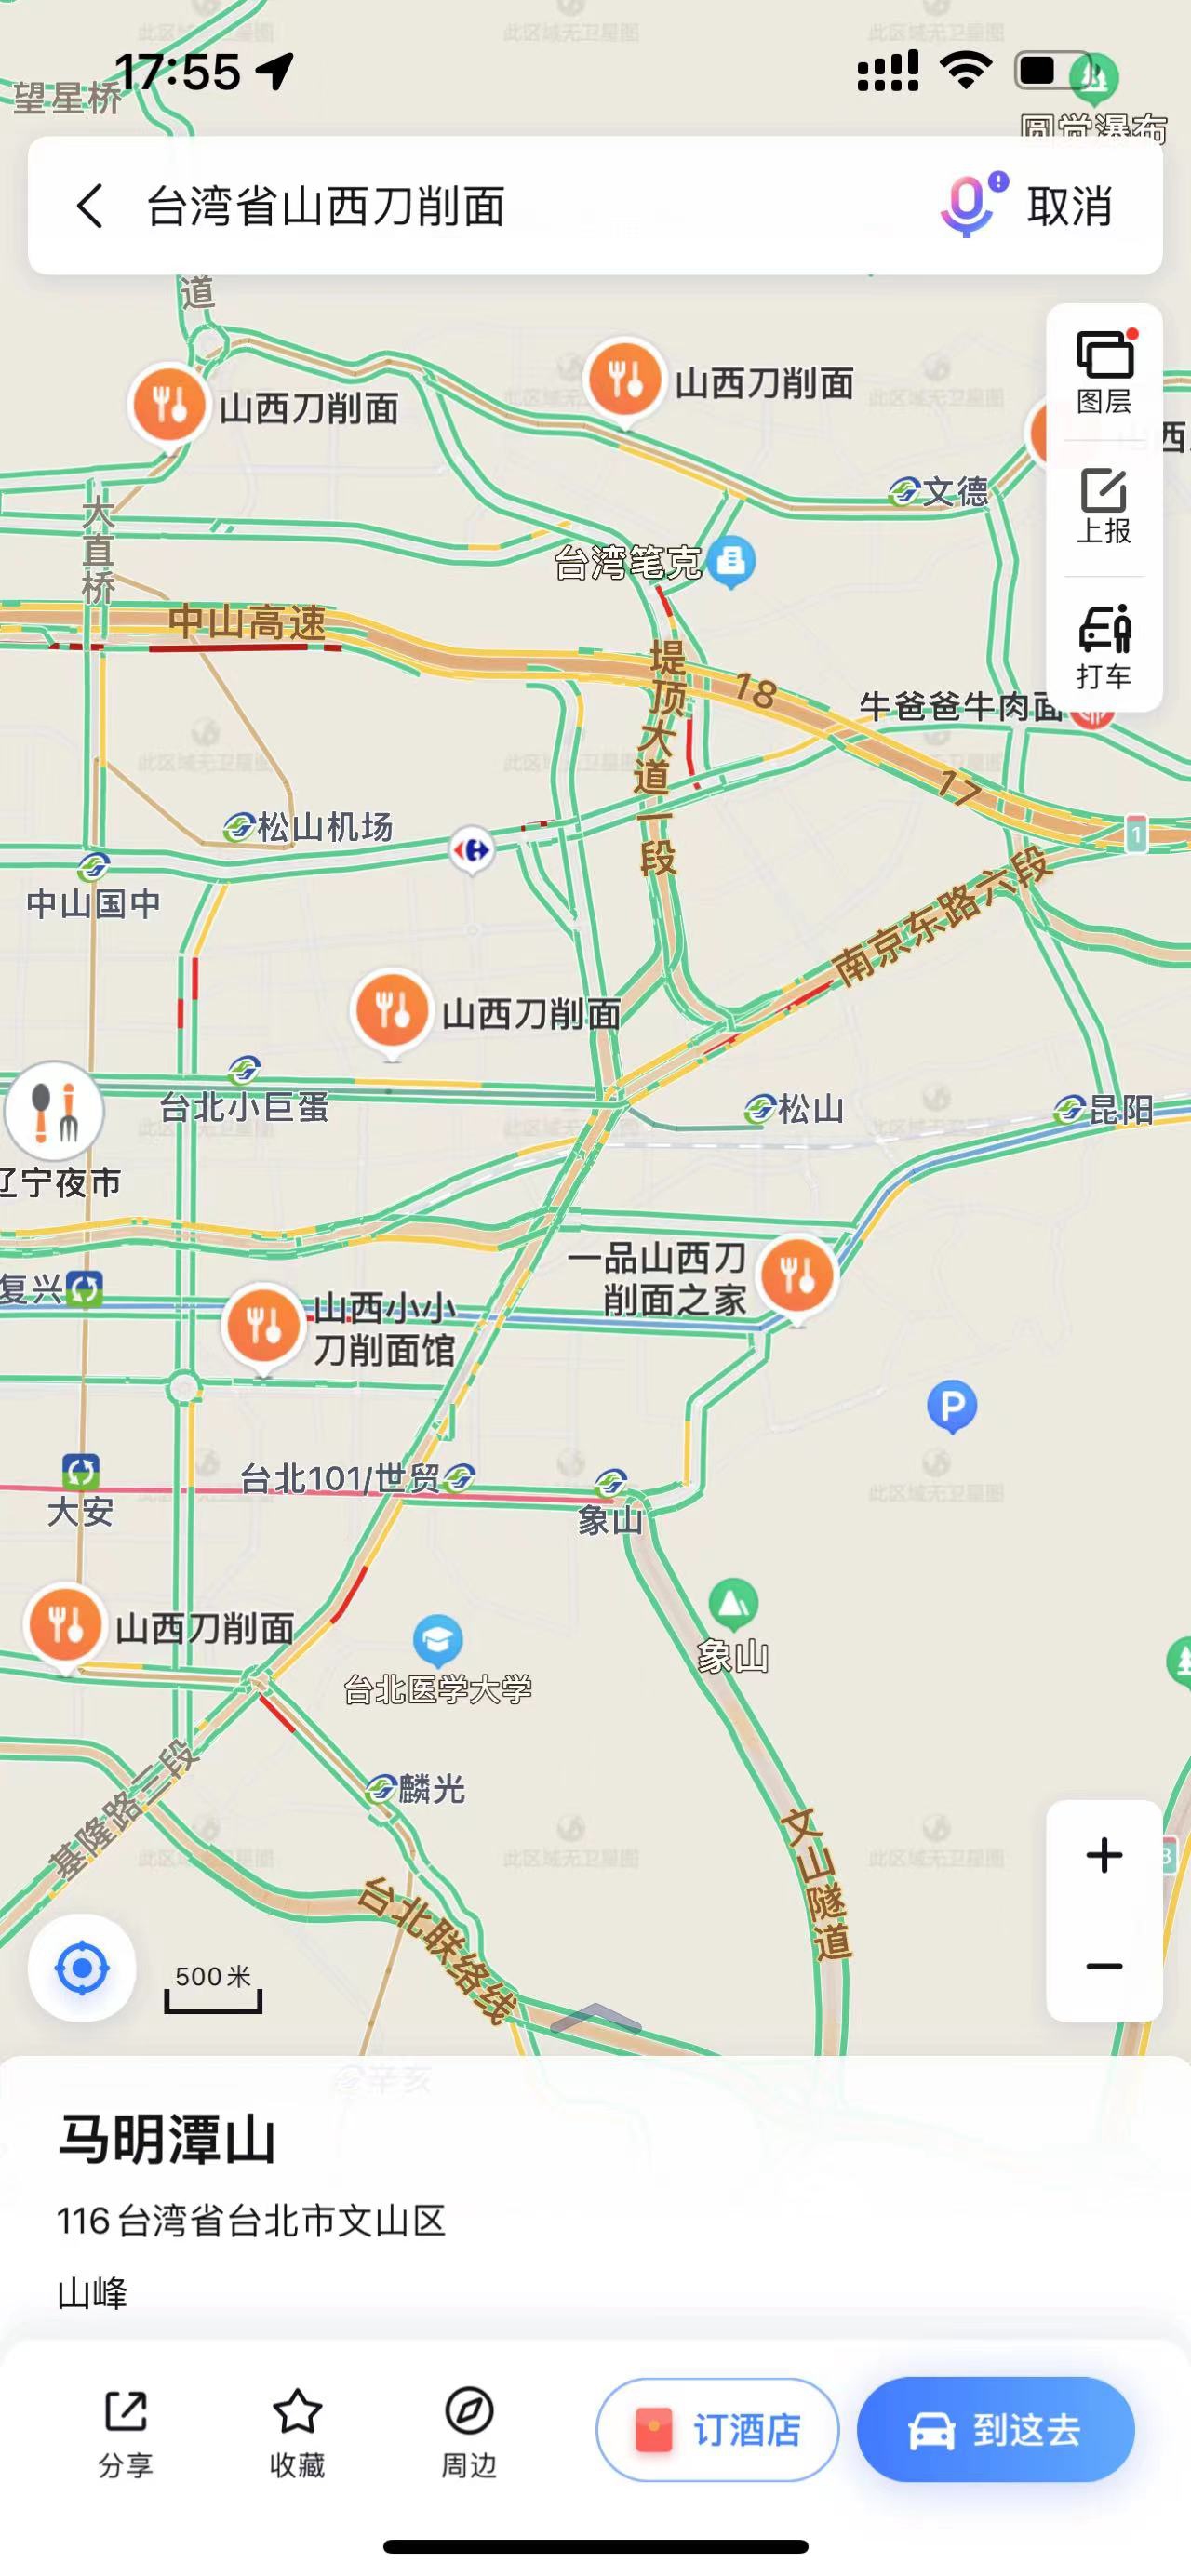 Photo: A screenshot from Baidu Map